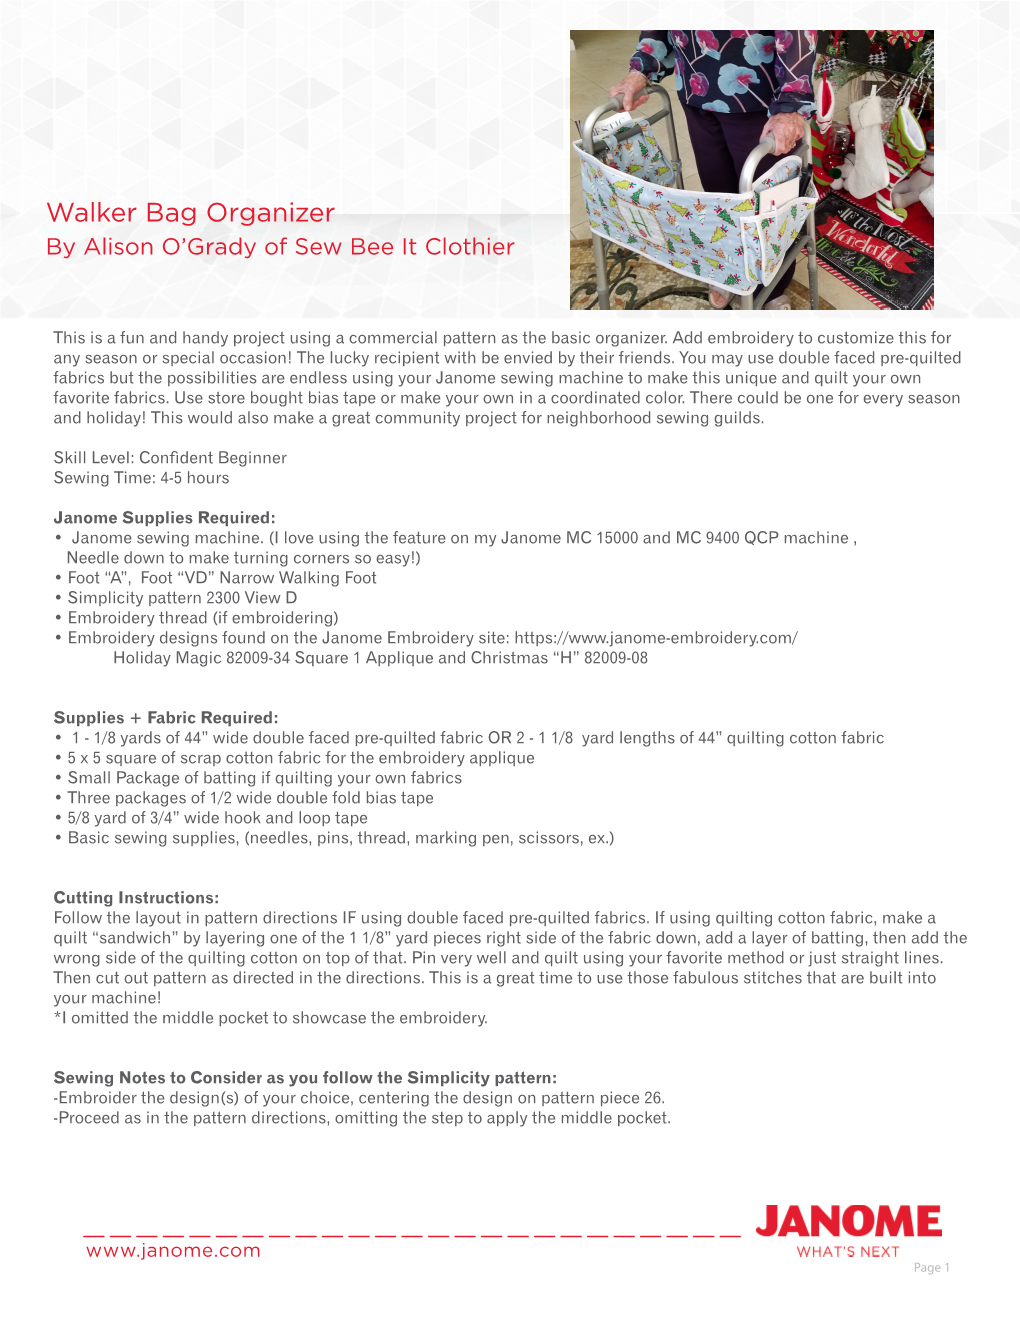 Walker Bag Organizer by Alison O’Grady of Sew Bee It Clothier